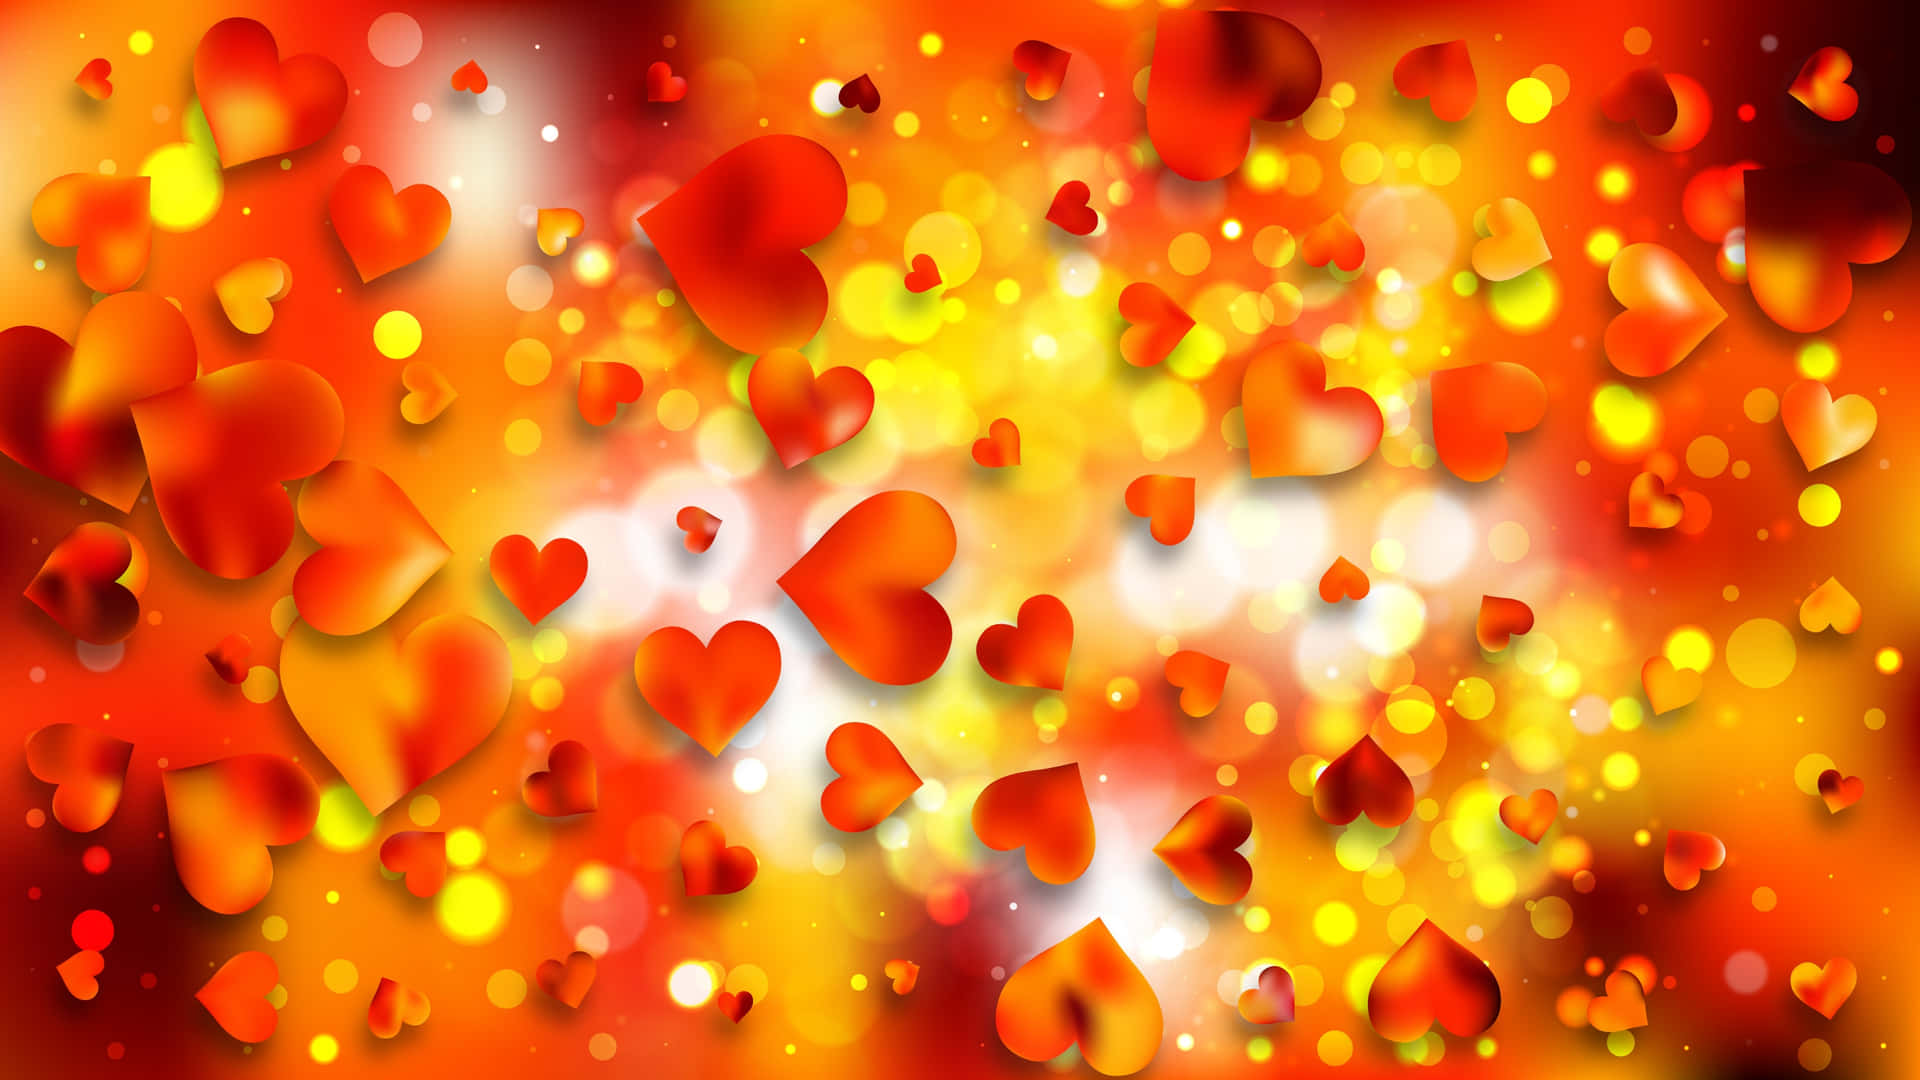 Vibrant Orange Heart Radiating Warmth and Love Wallpaper